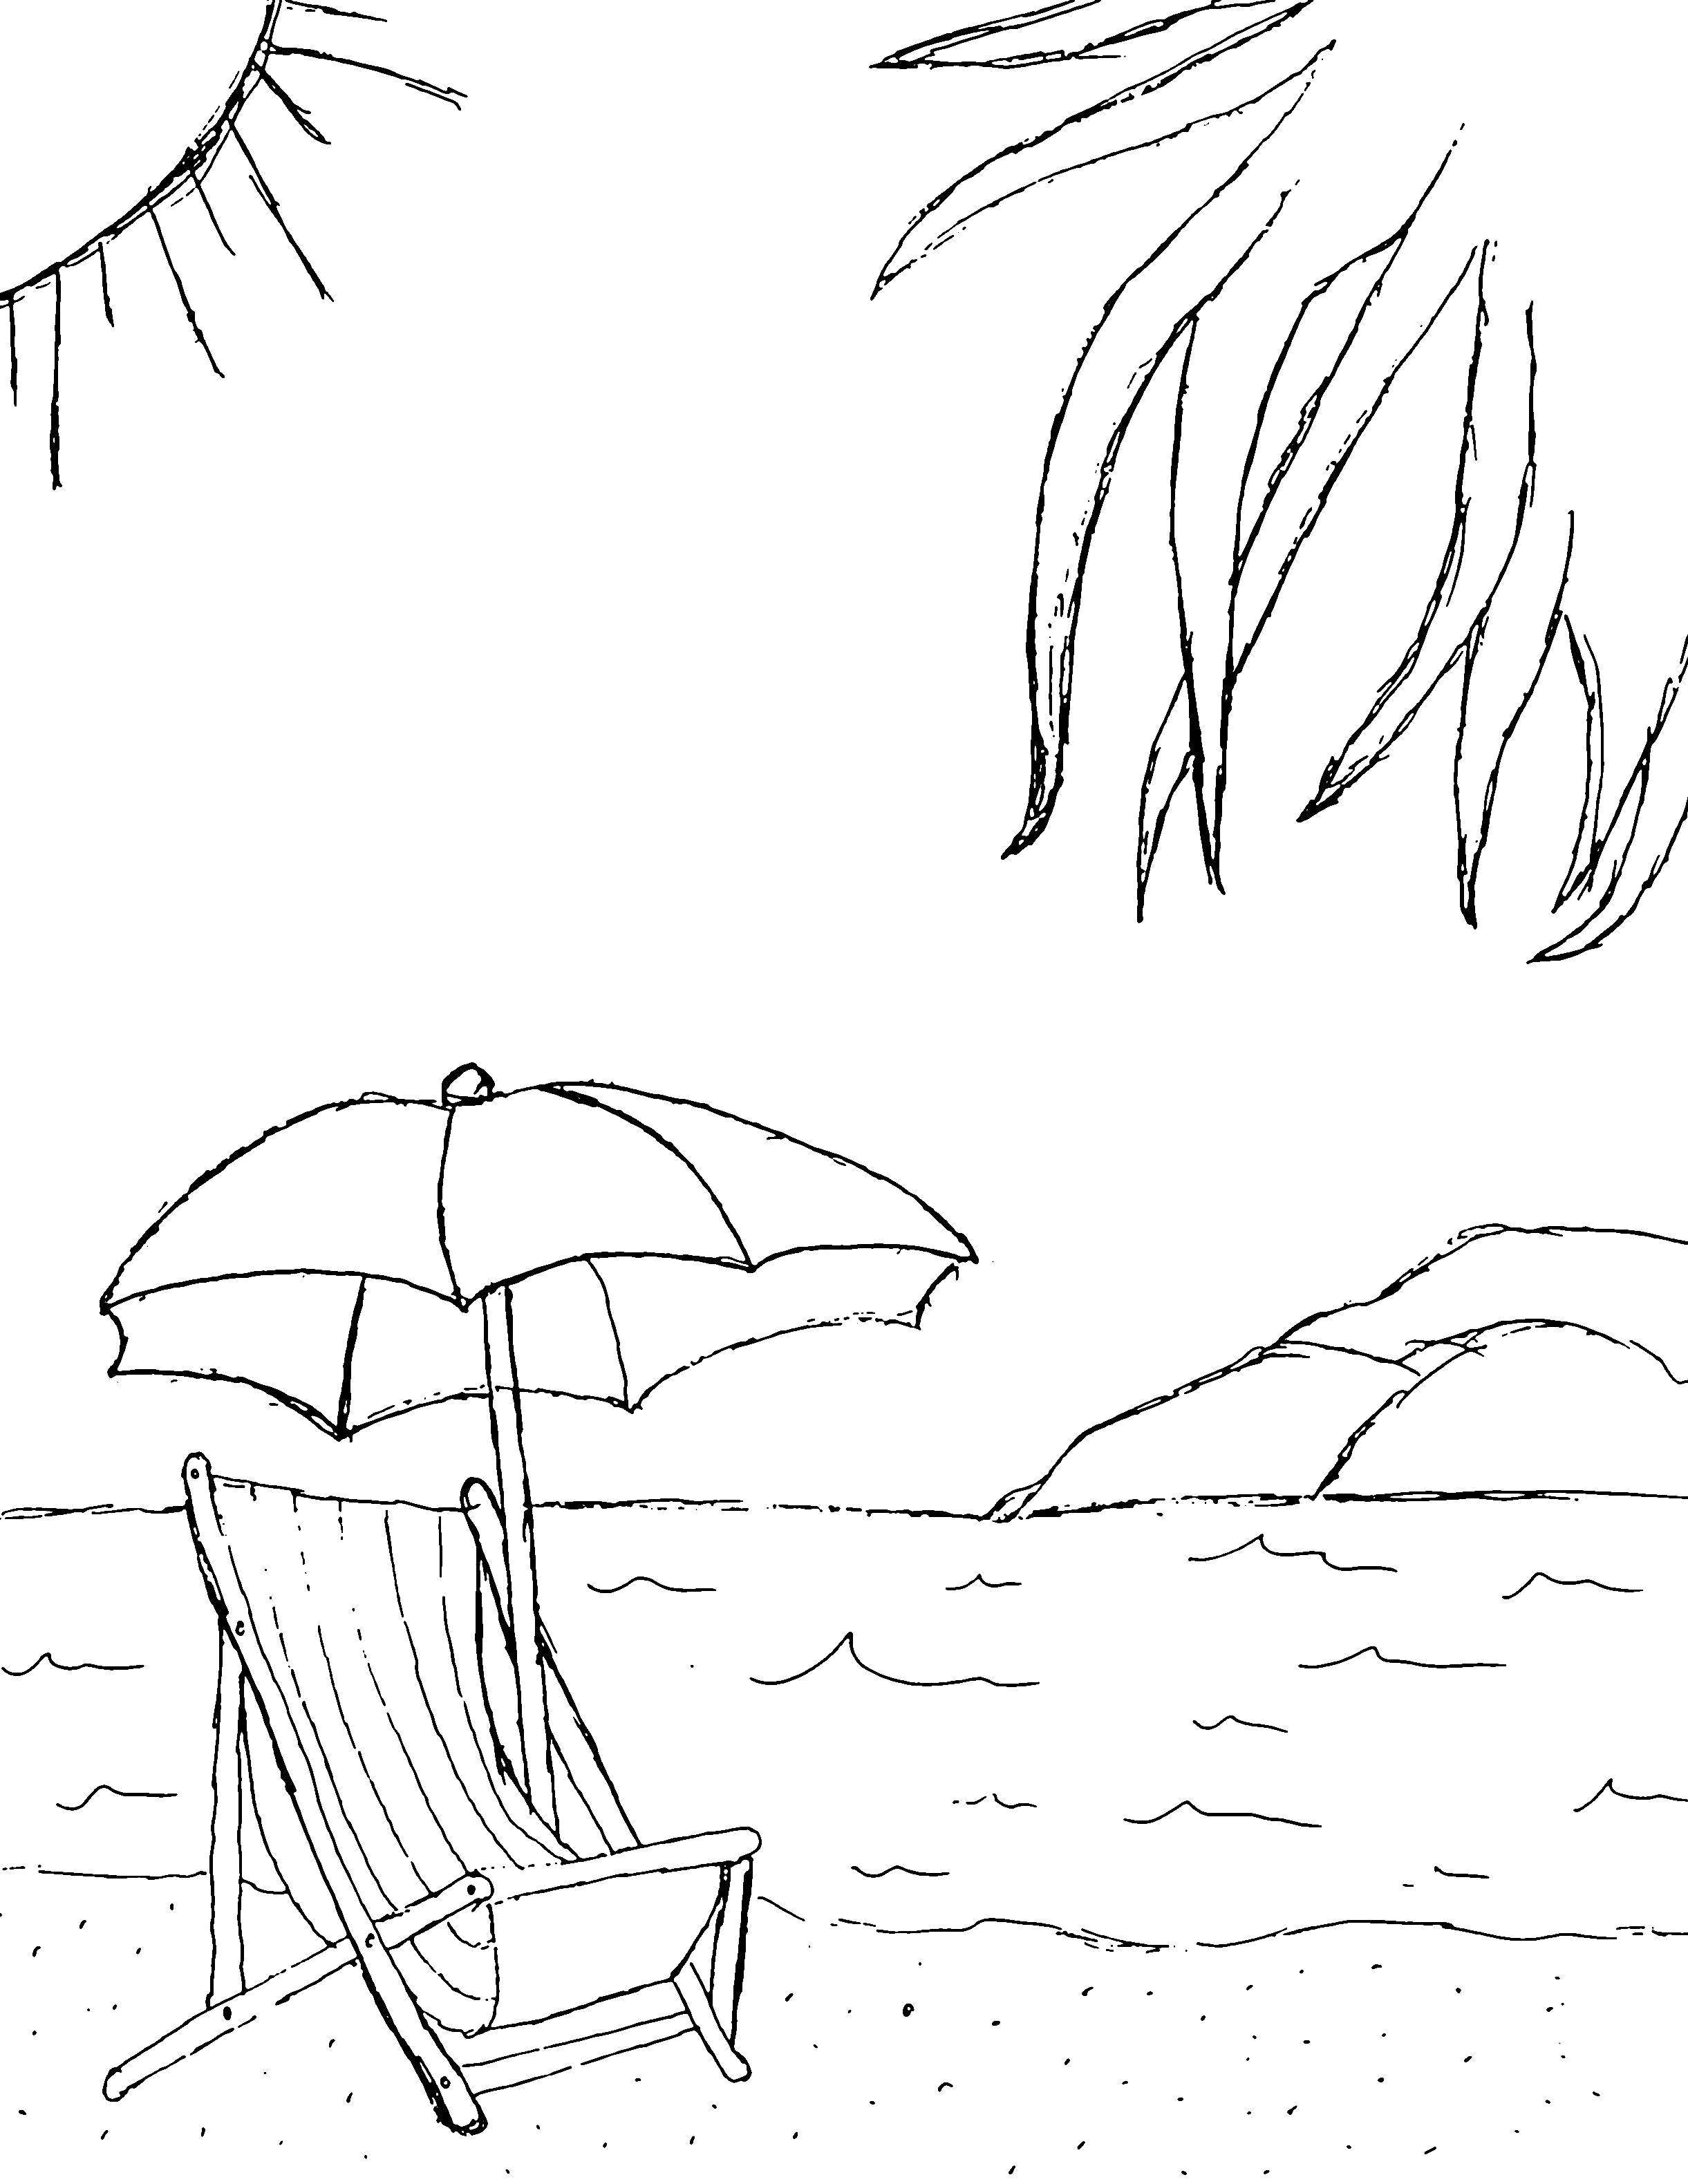 Coloring Beach chair and umbrella on the shore. Category Summer beach. Tags:  Beach, deckchair, umbrella, vacation.